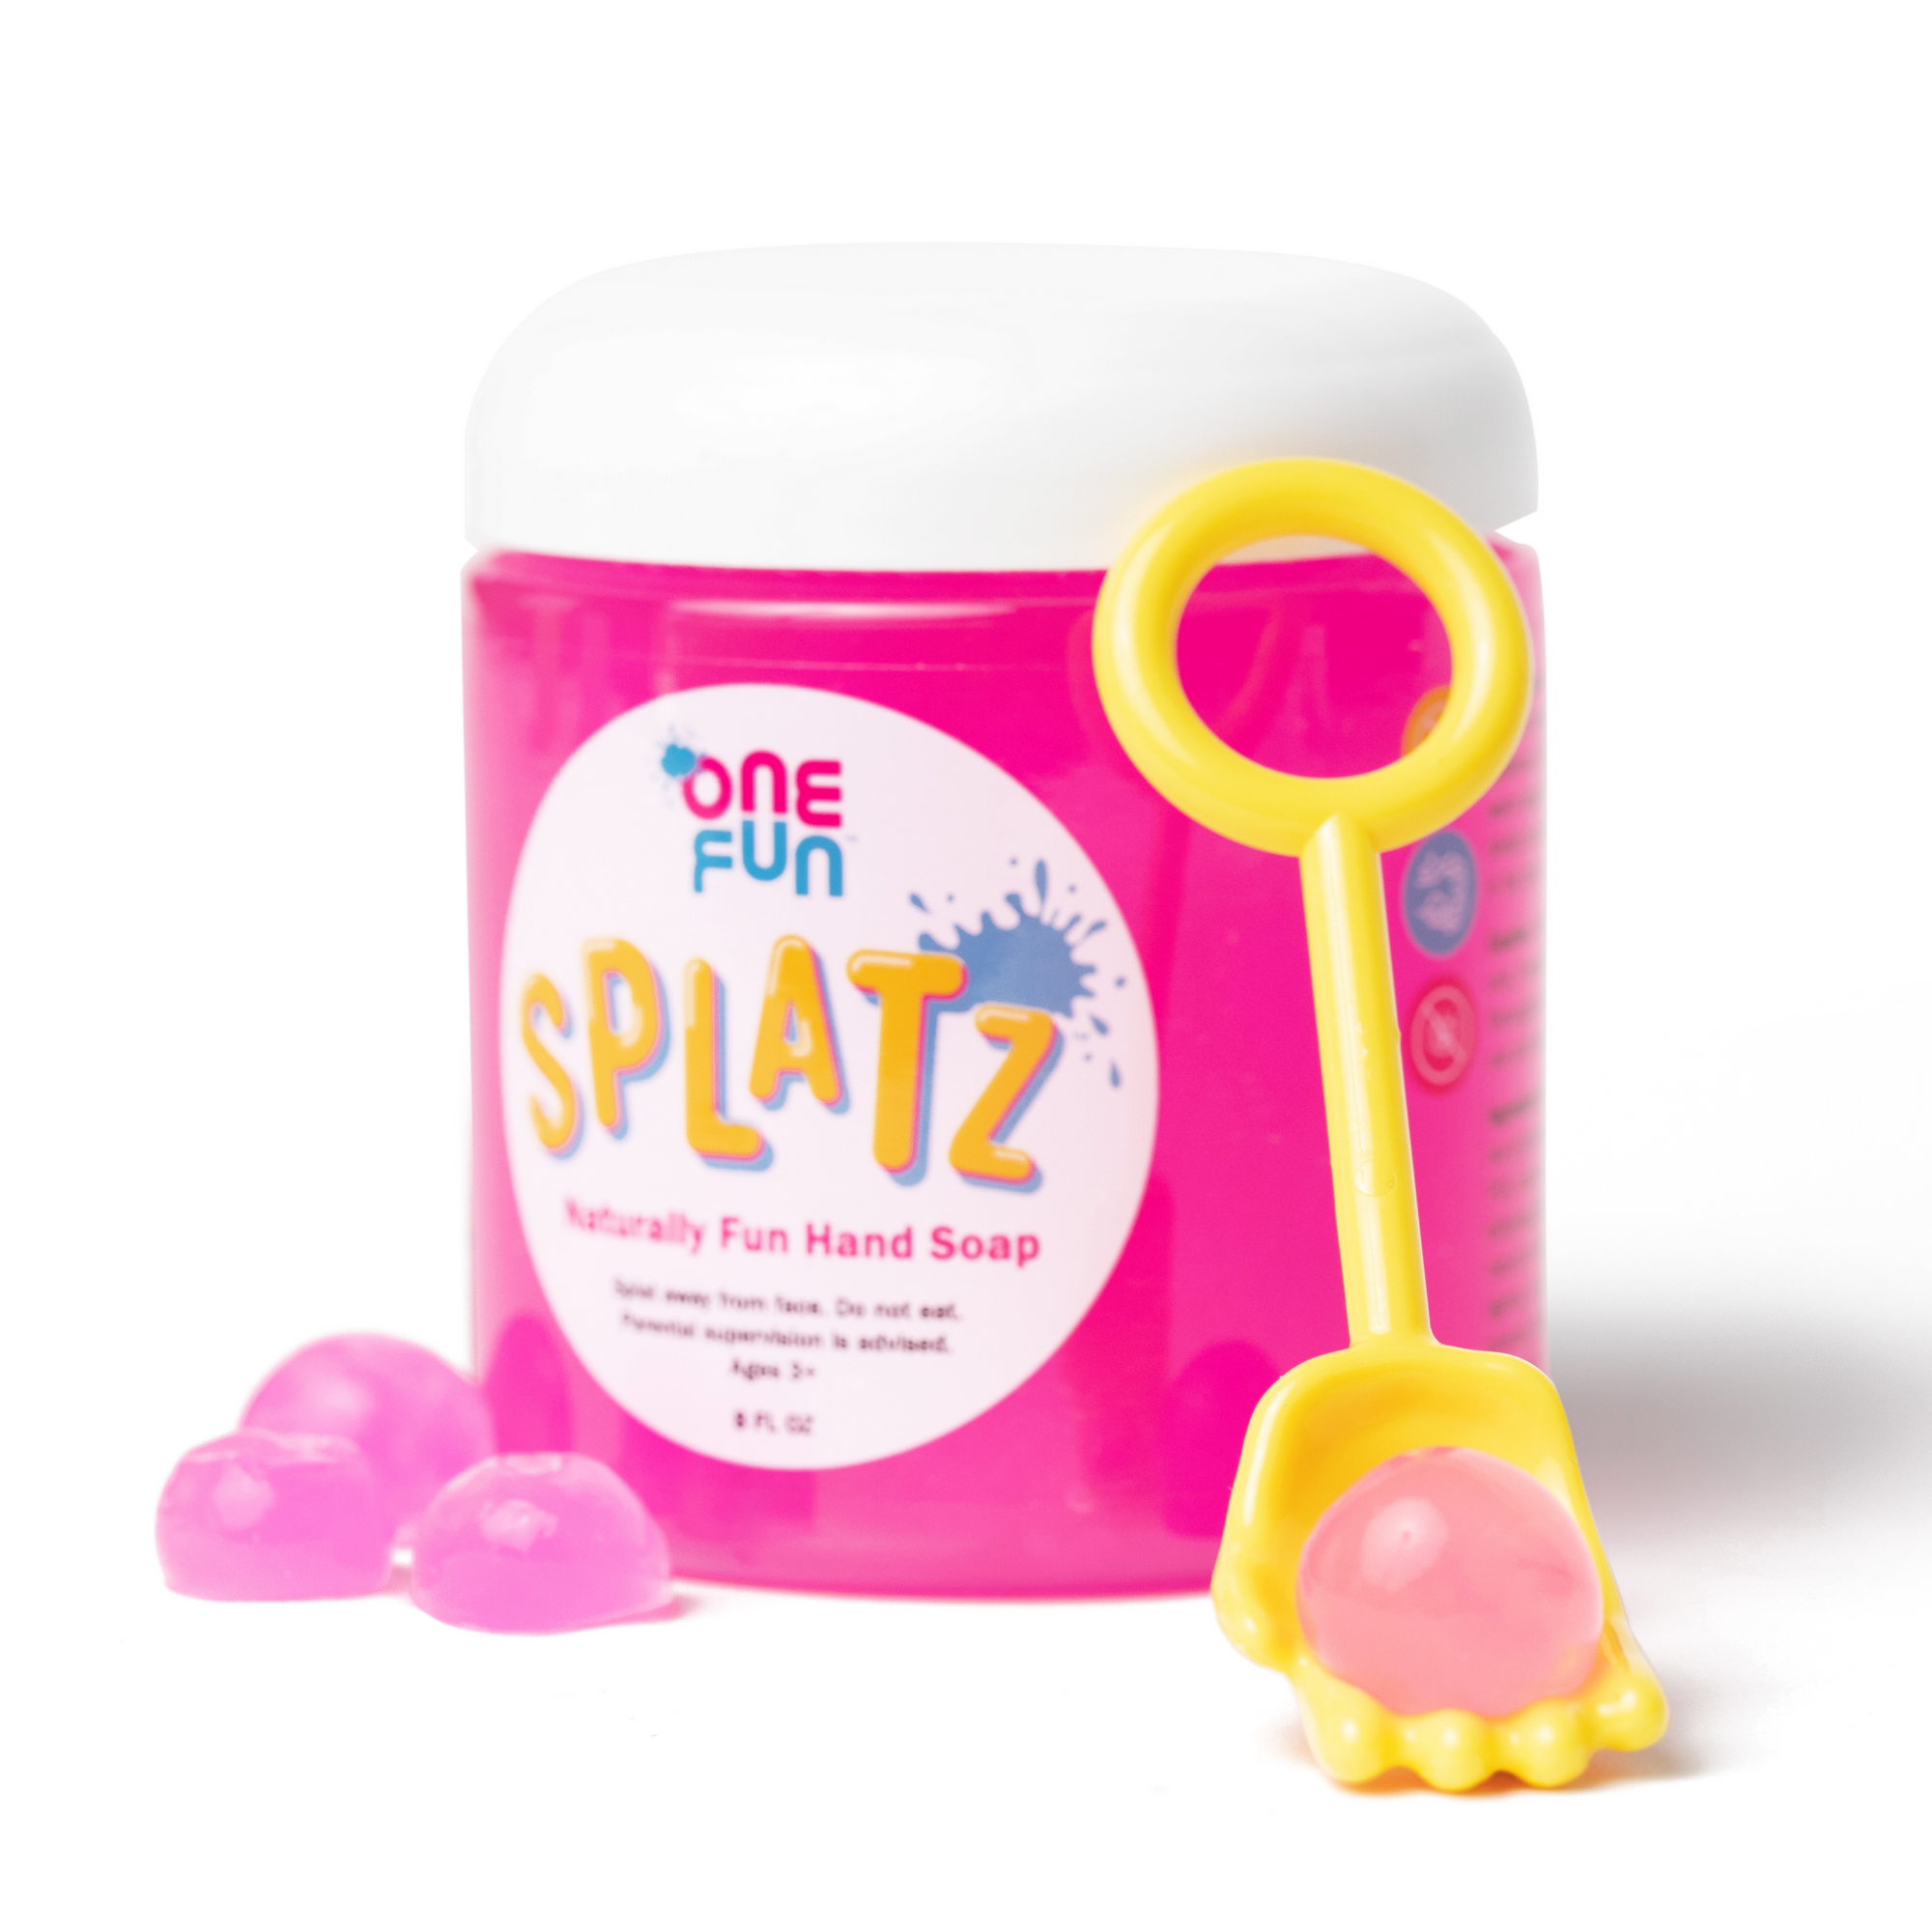 SPLATZ Naturally Fun Hand Soap - Wholesale Case Pack (6 Units)